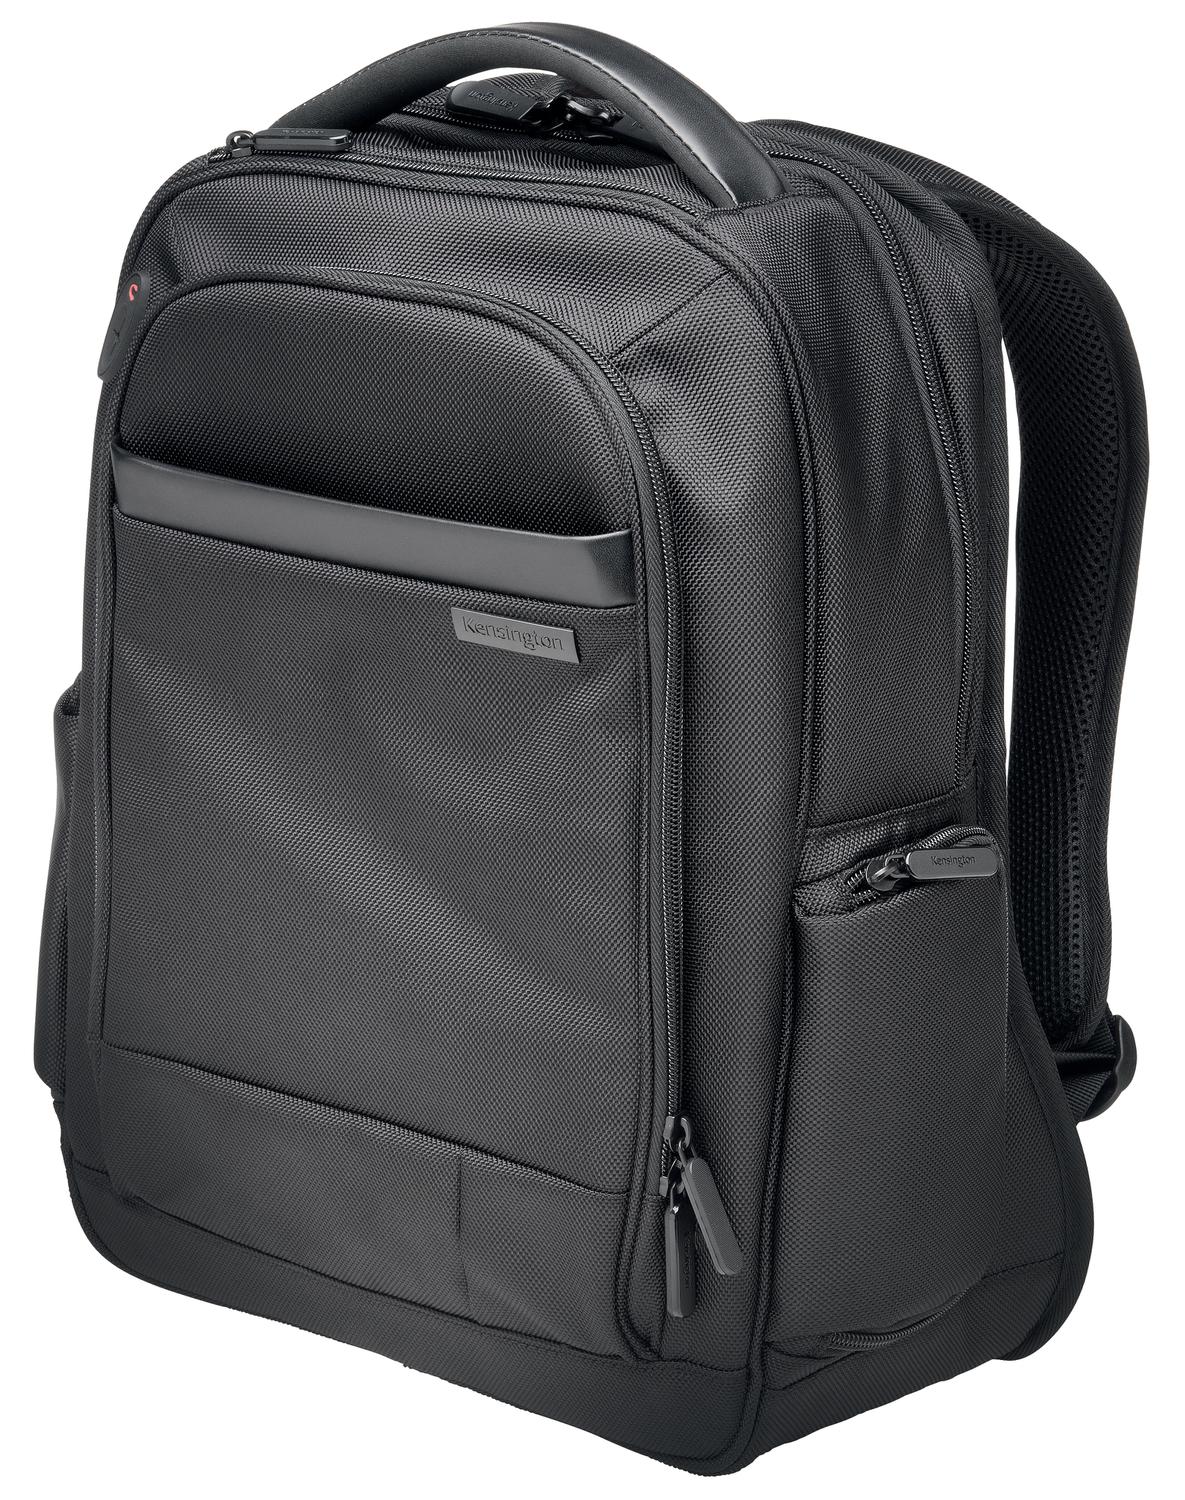 Kensington Contour 2.0 Pro Backpack for Laptops Up To 14 